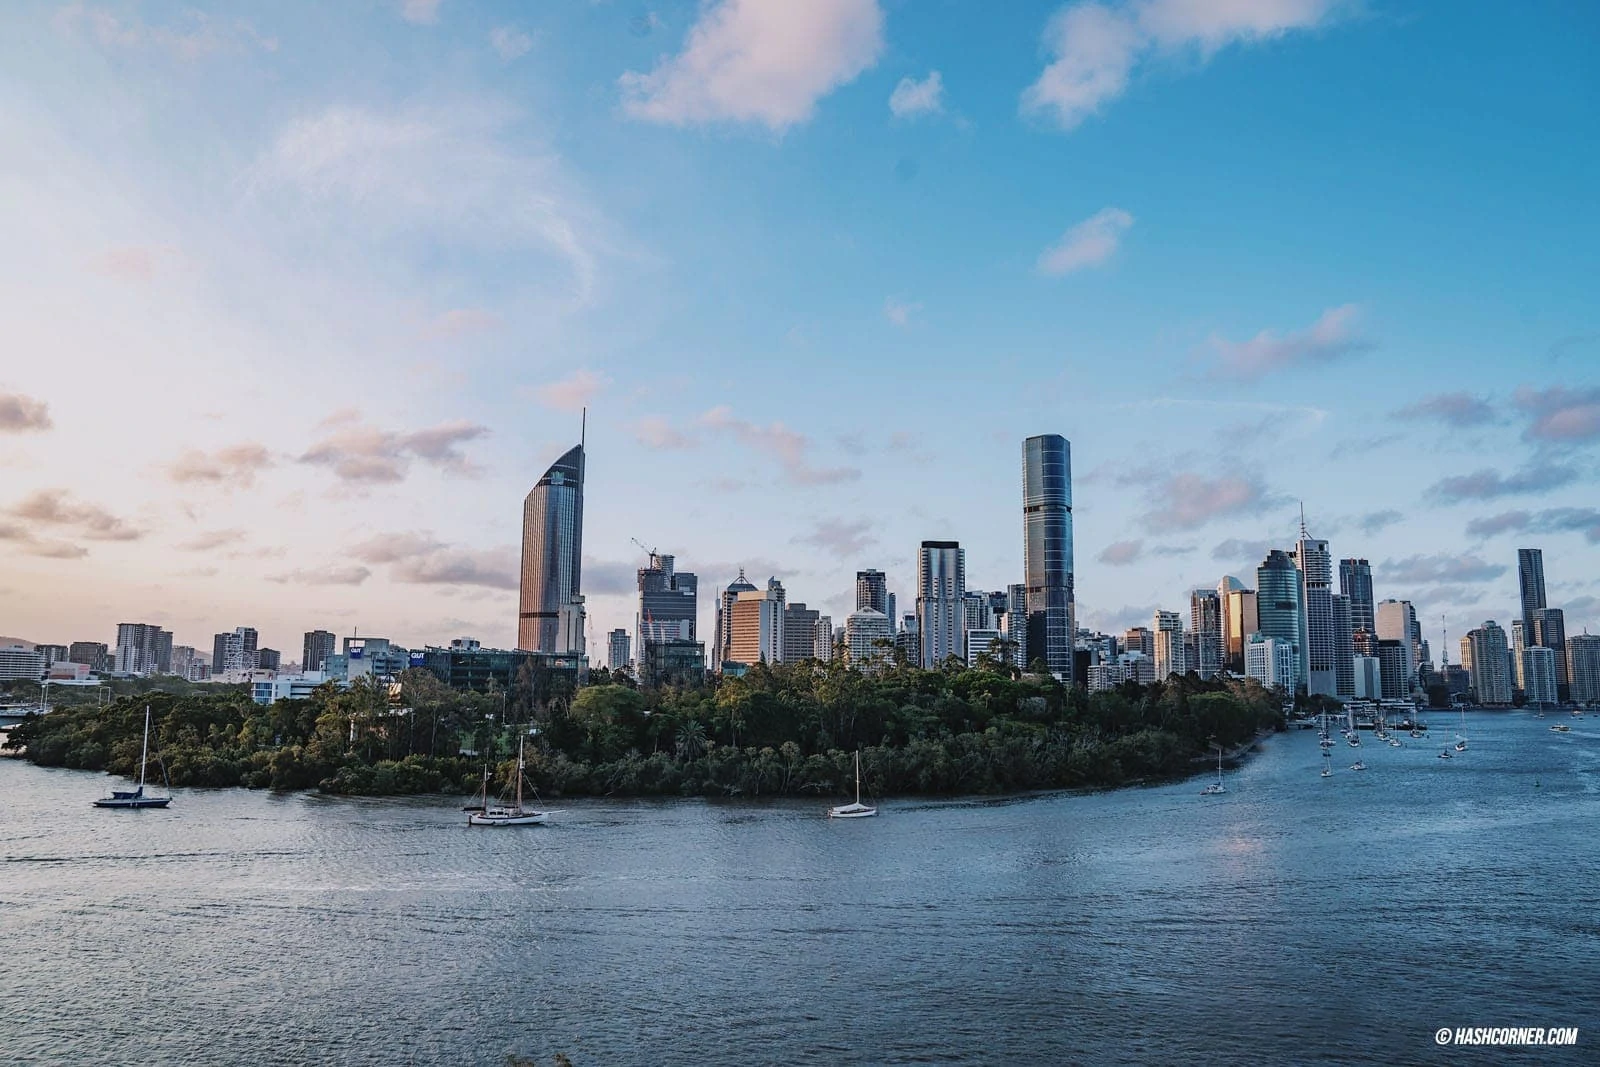 Brisbane x Gold Coast : Complete Travel Guide